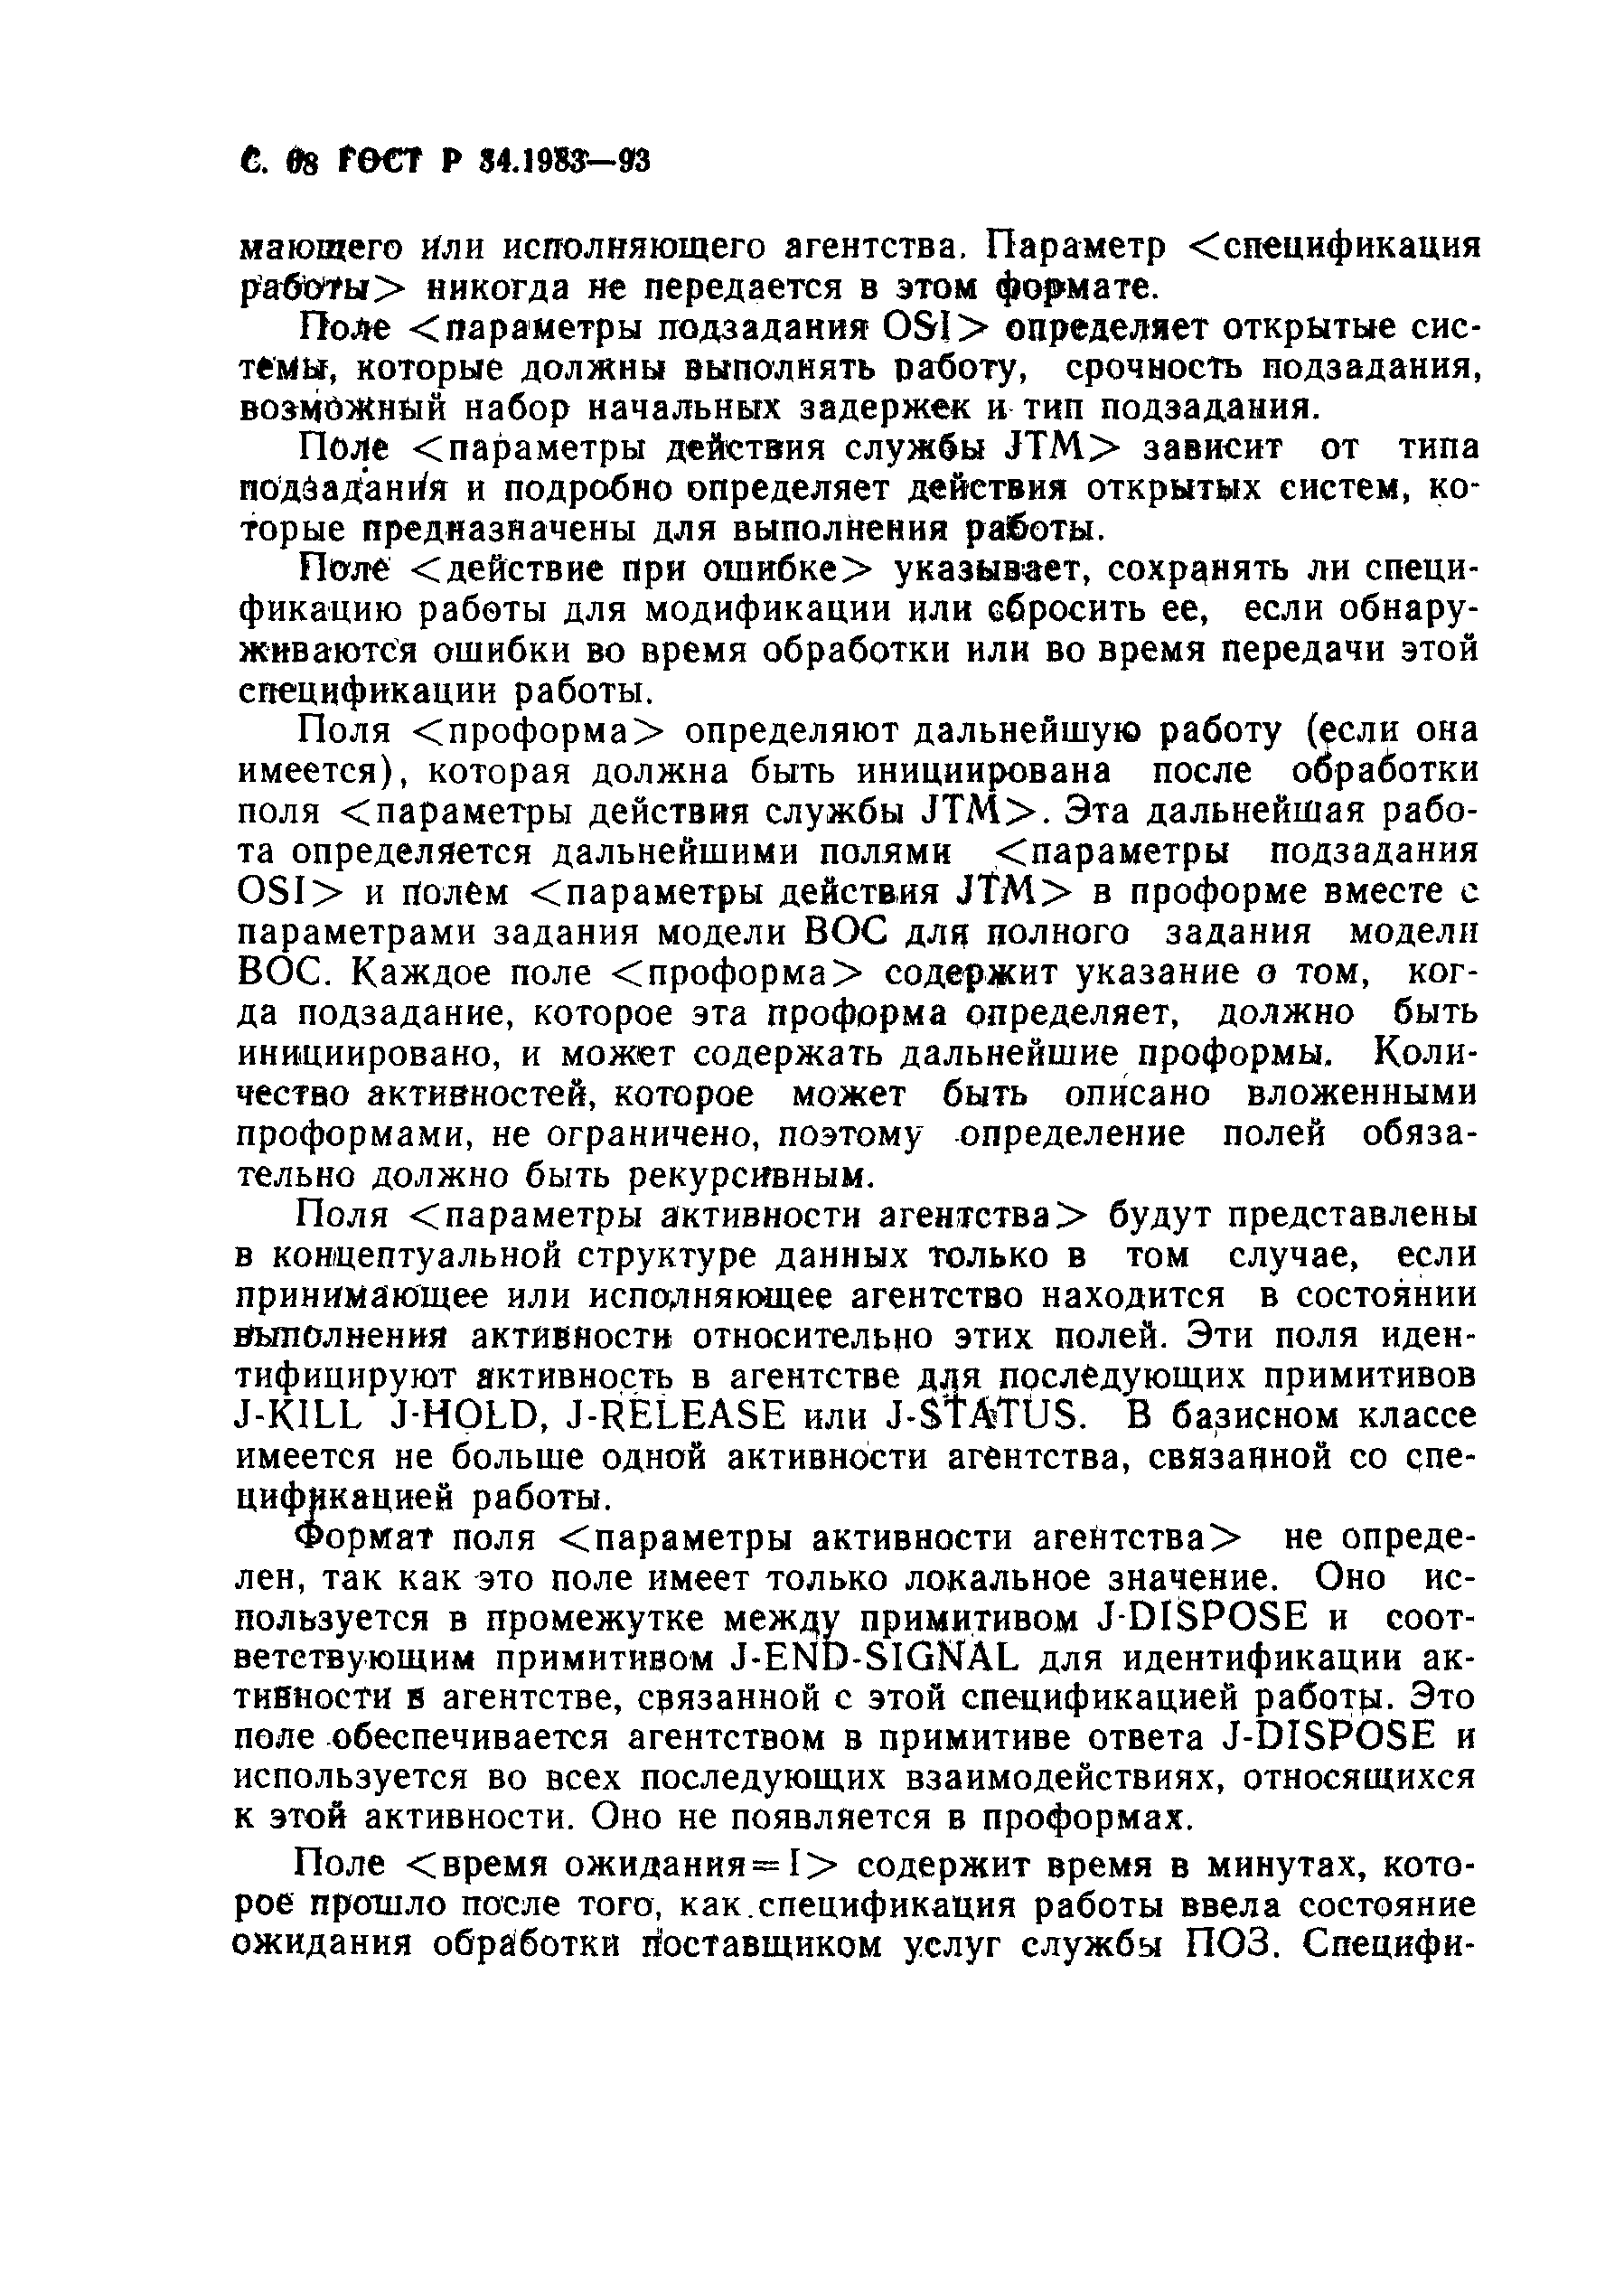 ГОСТ Р 34.1983-93. Страница 69